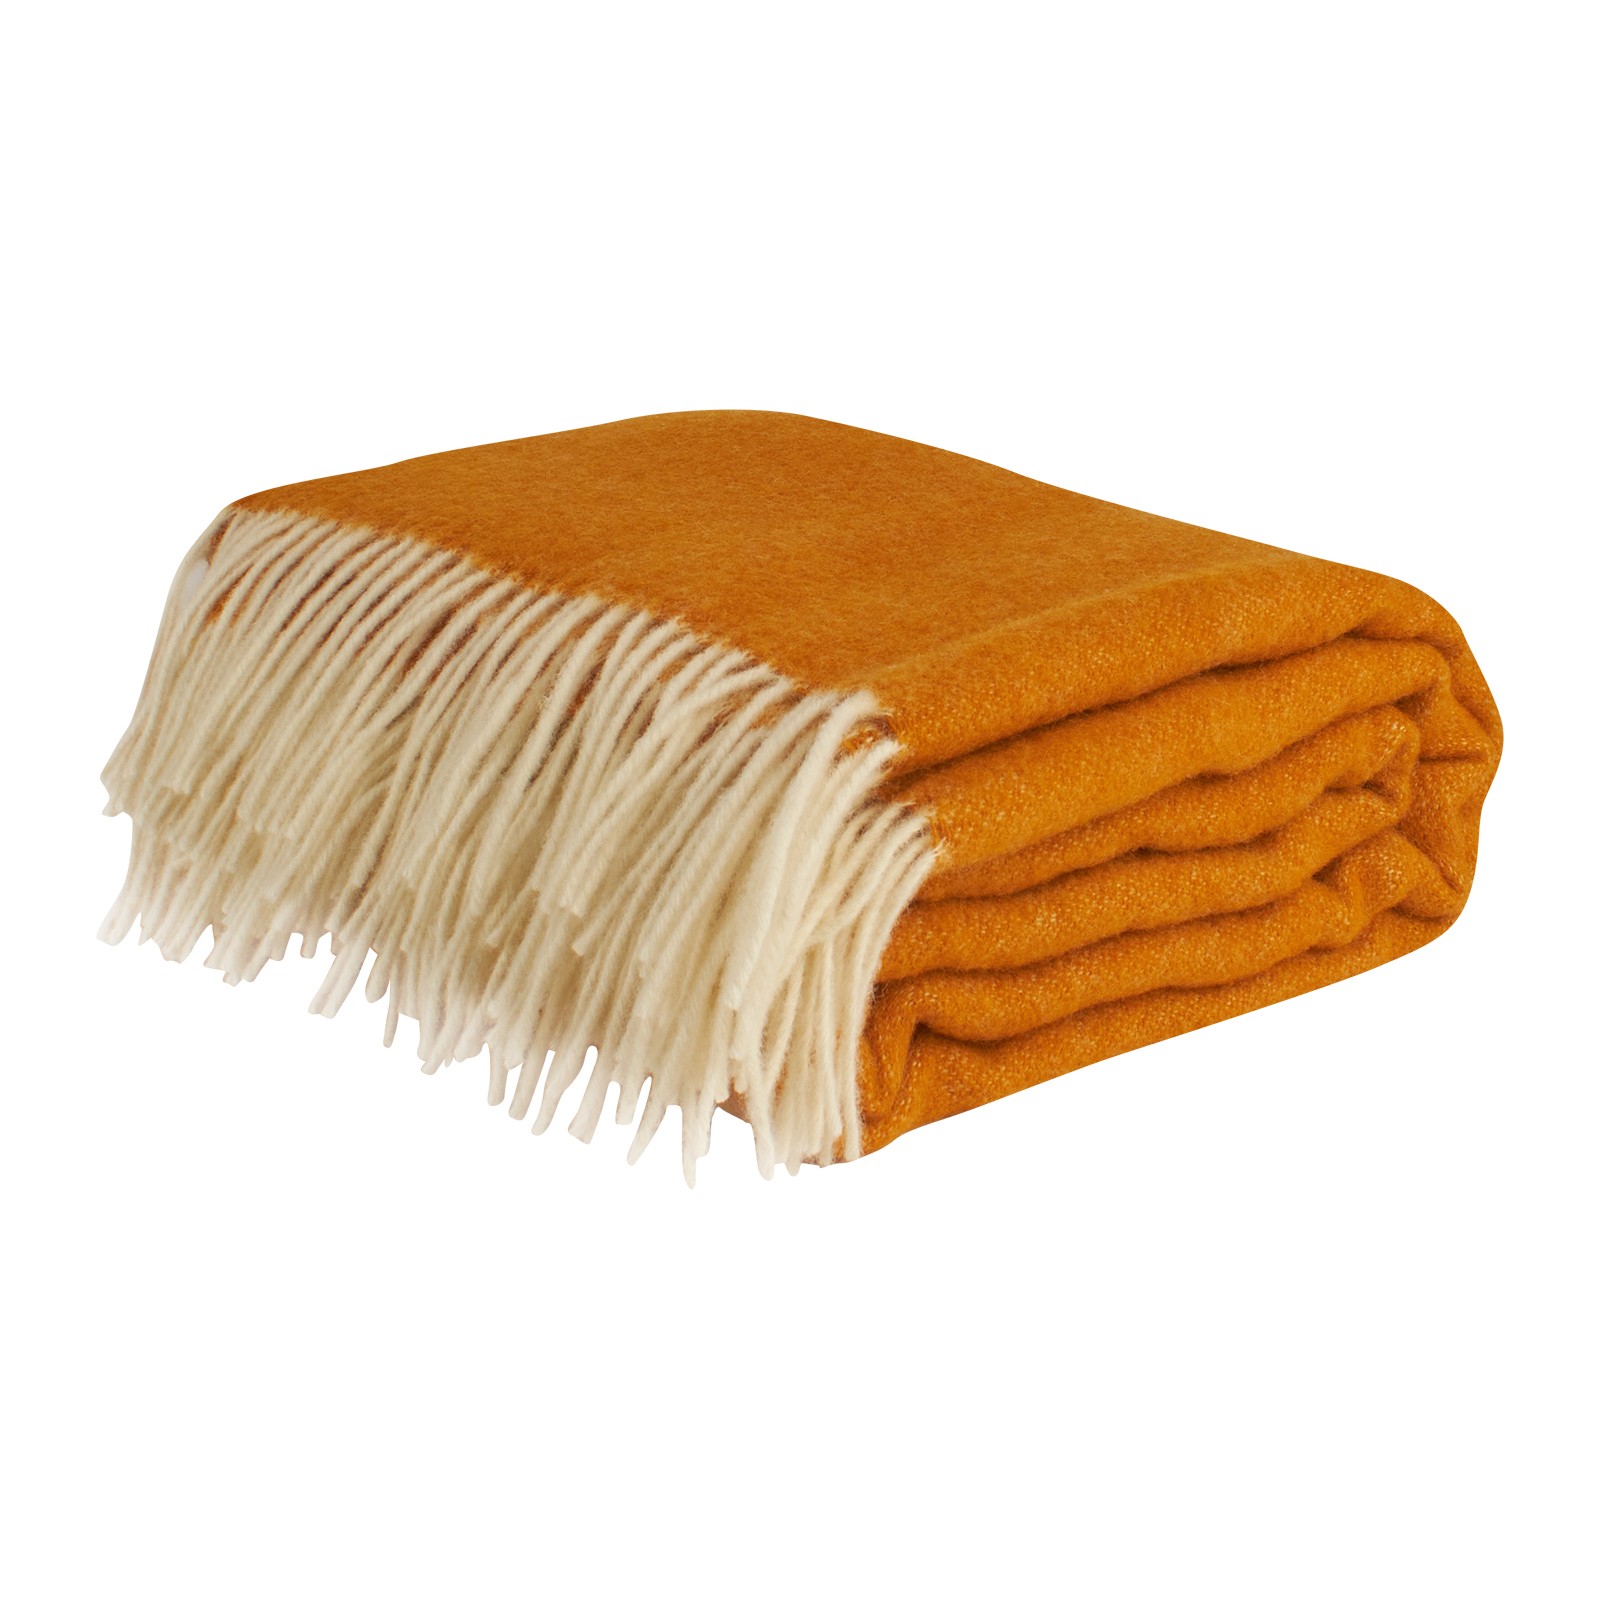 Blanket cozy blankets 100% new zealand wool - 36316 from Cozy Blankets ...